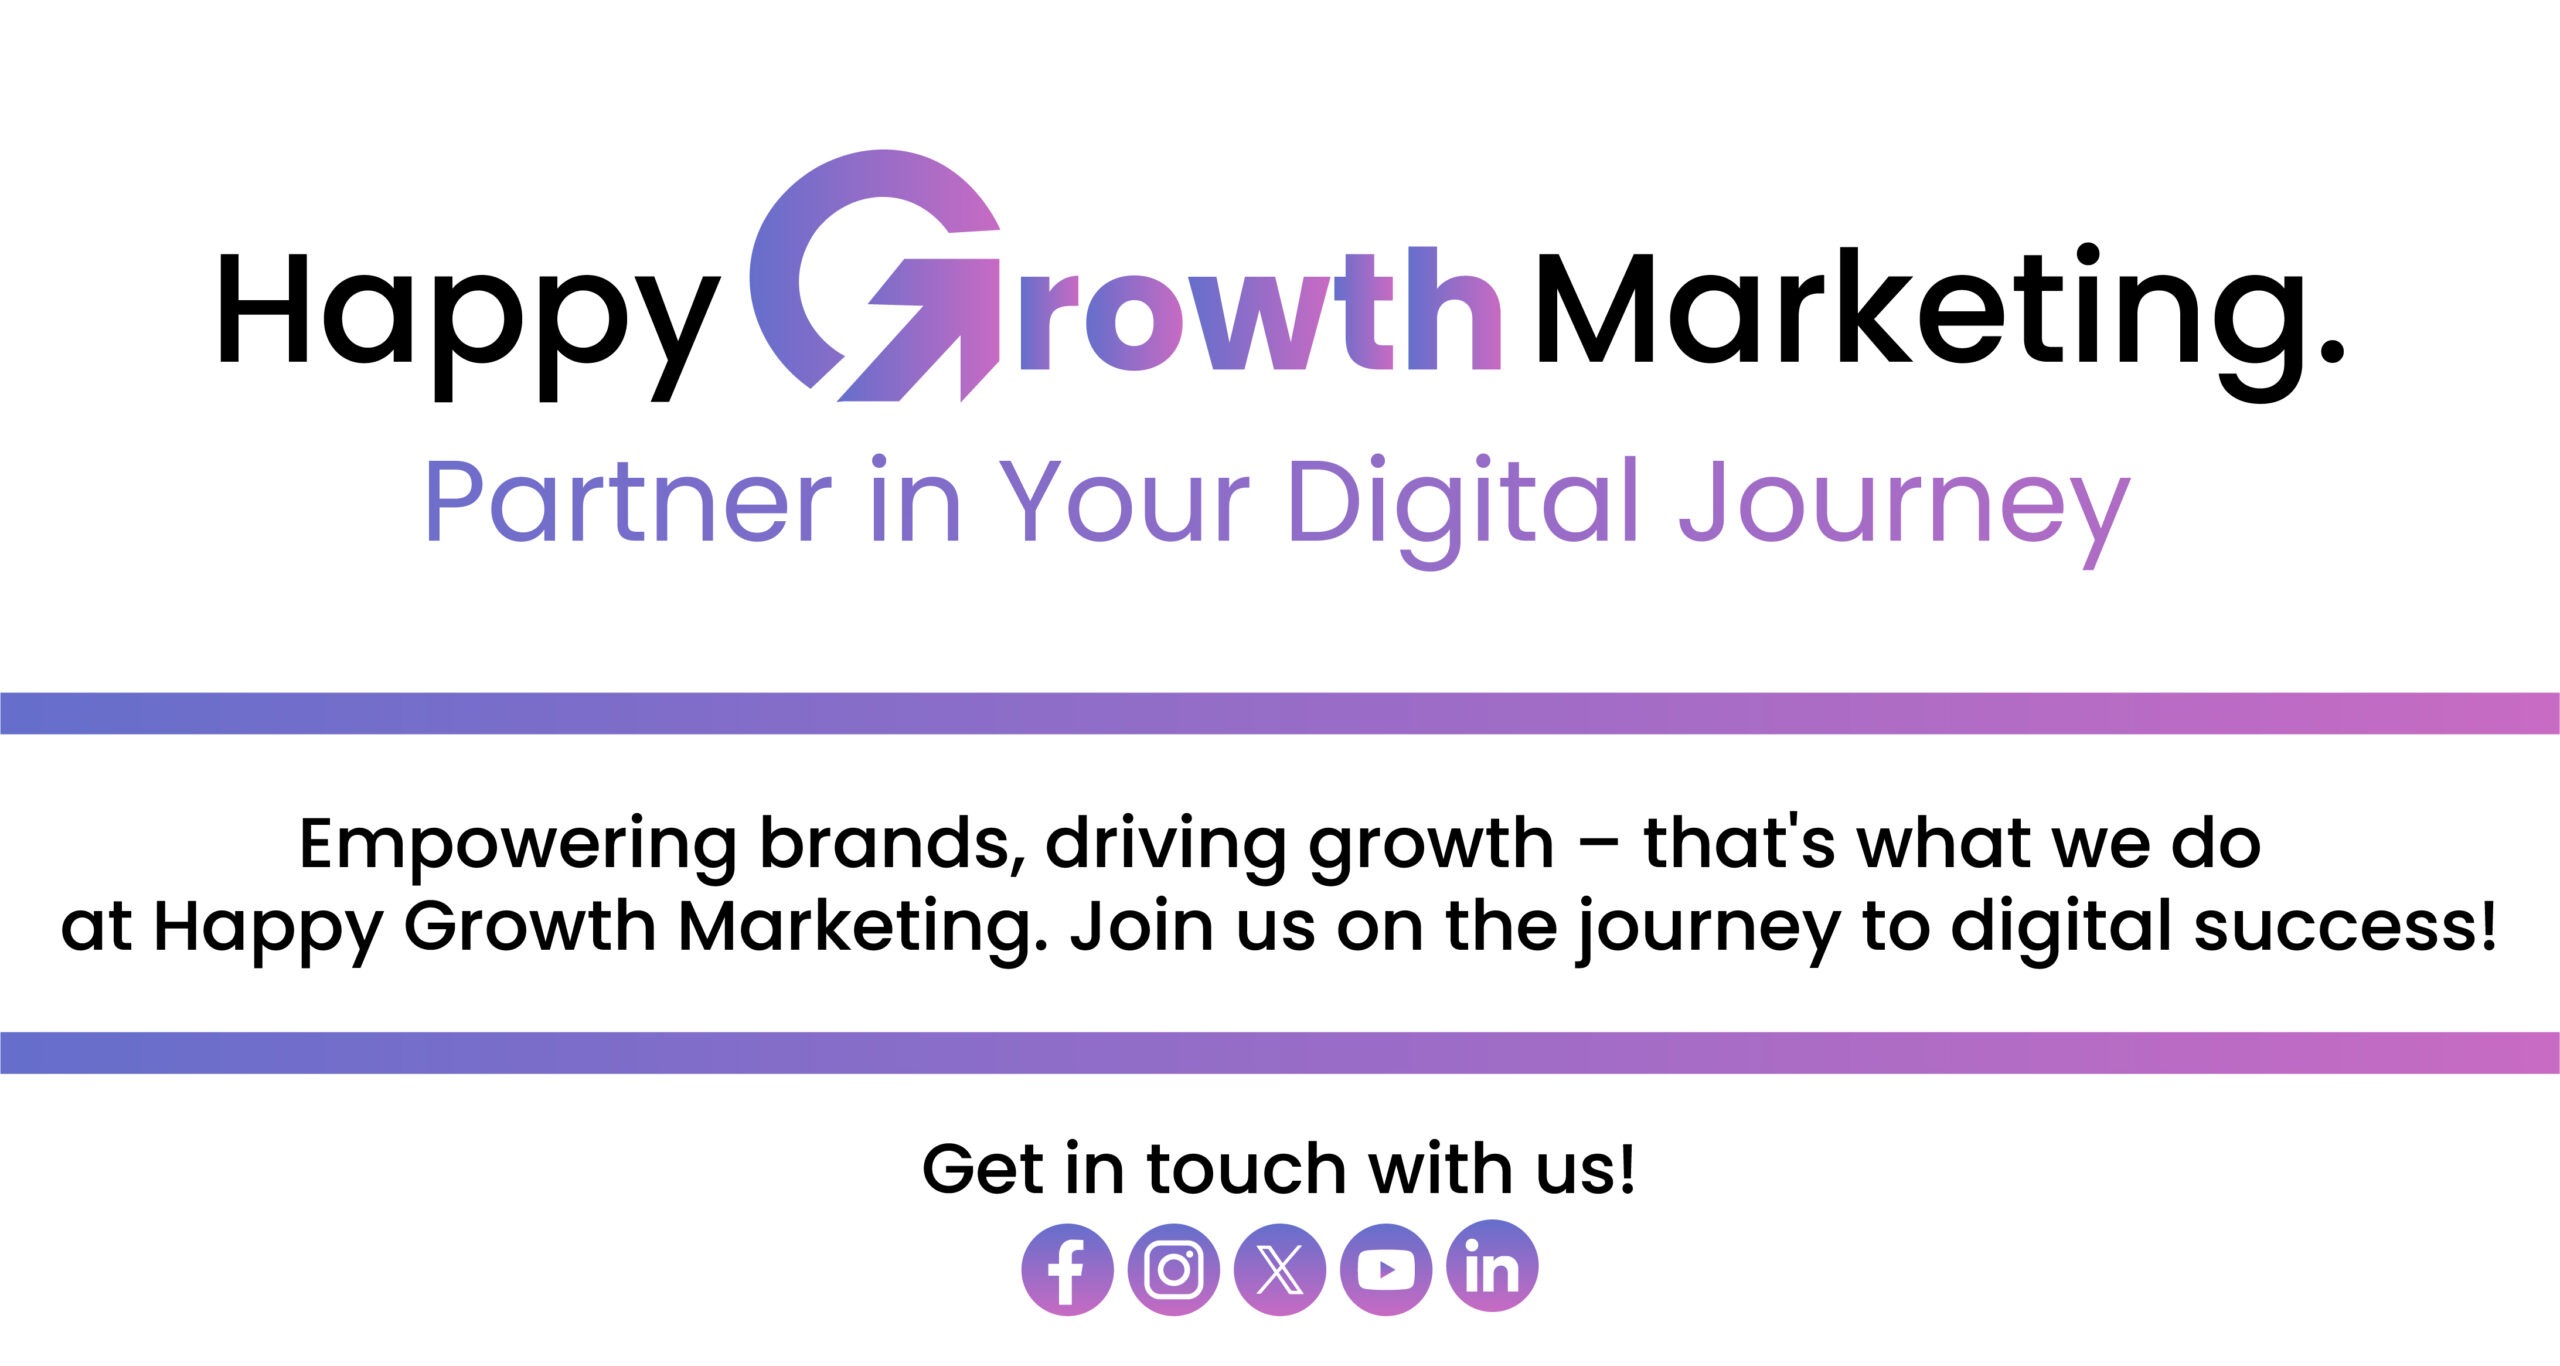 Happy Growth Marketing - Partner in Your Digital Journey